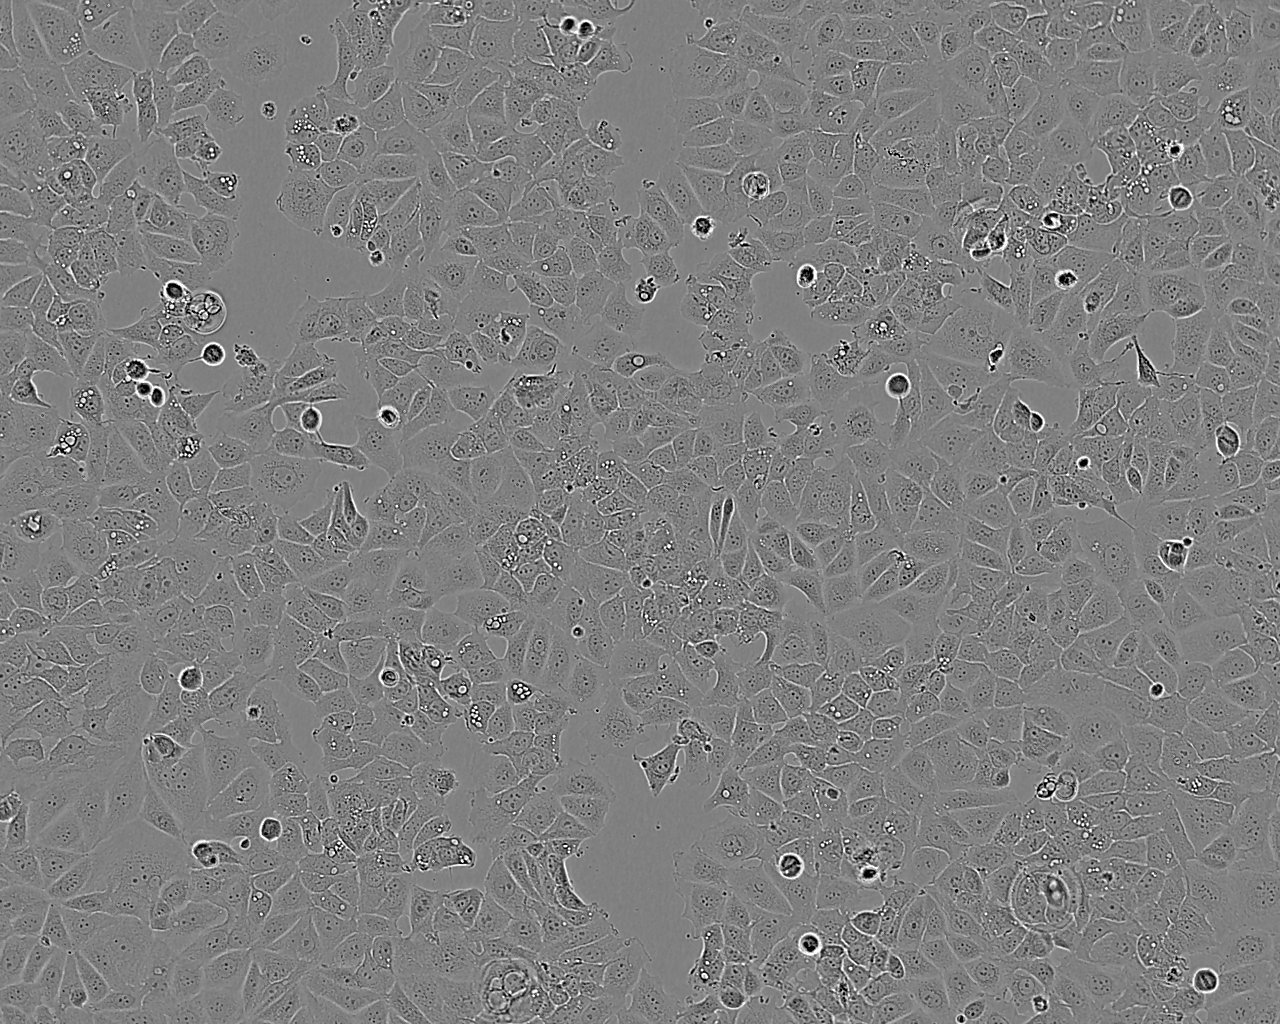 HC11 epithelioid cells细胞系,HC11 epithelioid cells